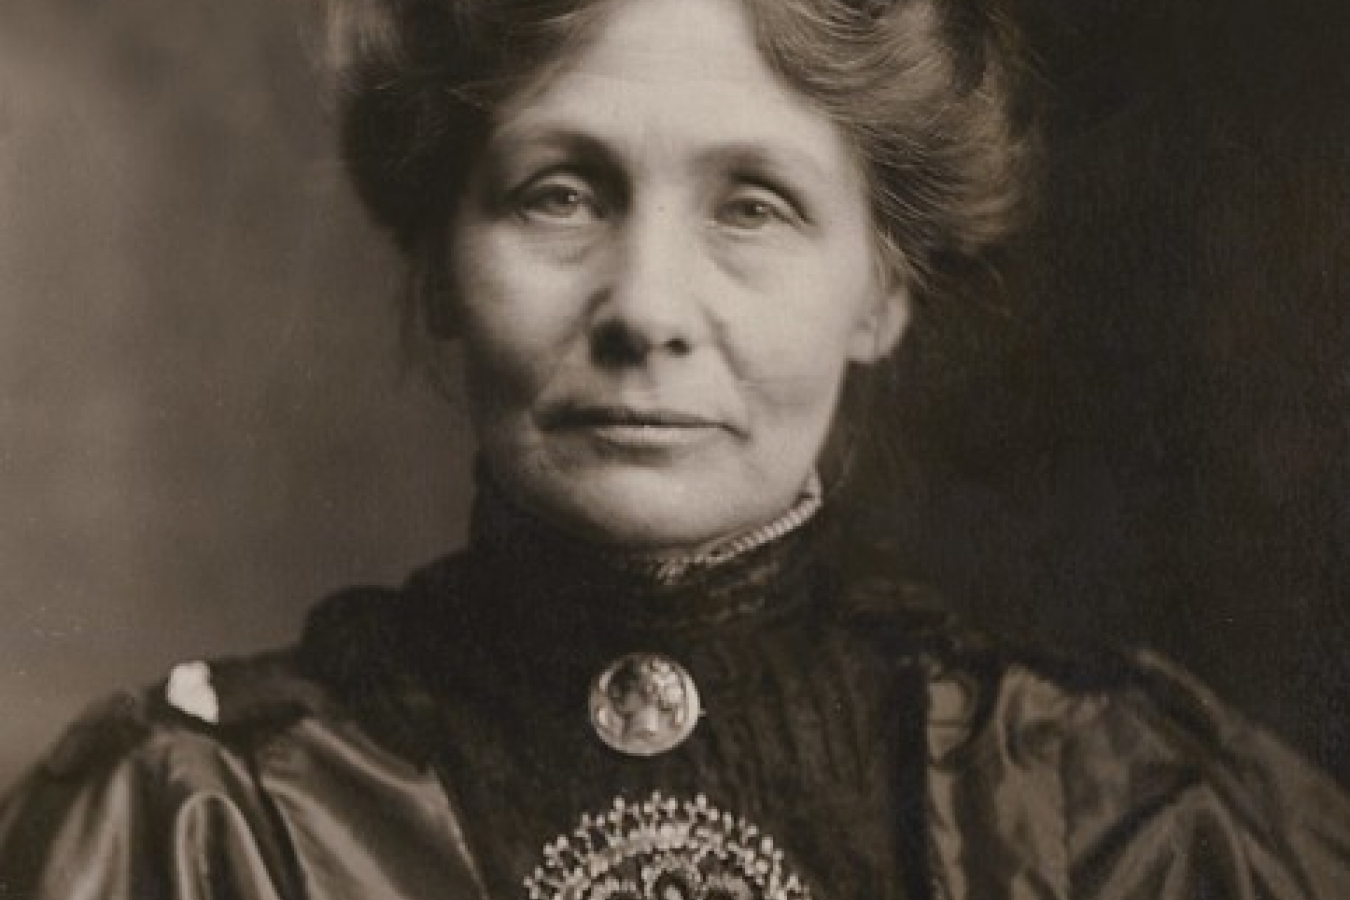 Emmeline Pankhurst, c.1910, suffragette helped women gain the vote